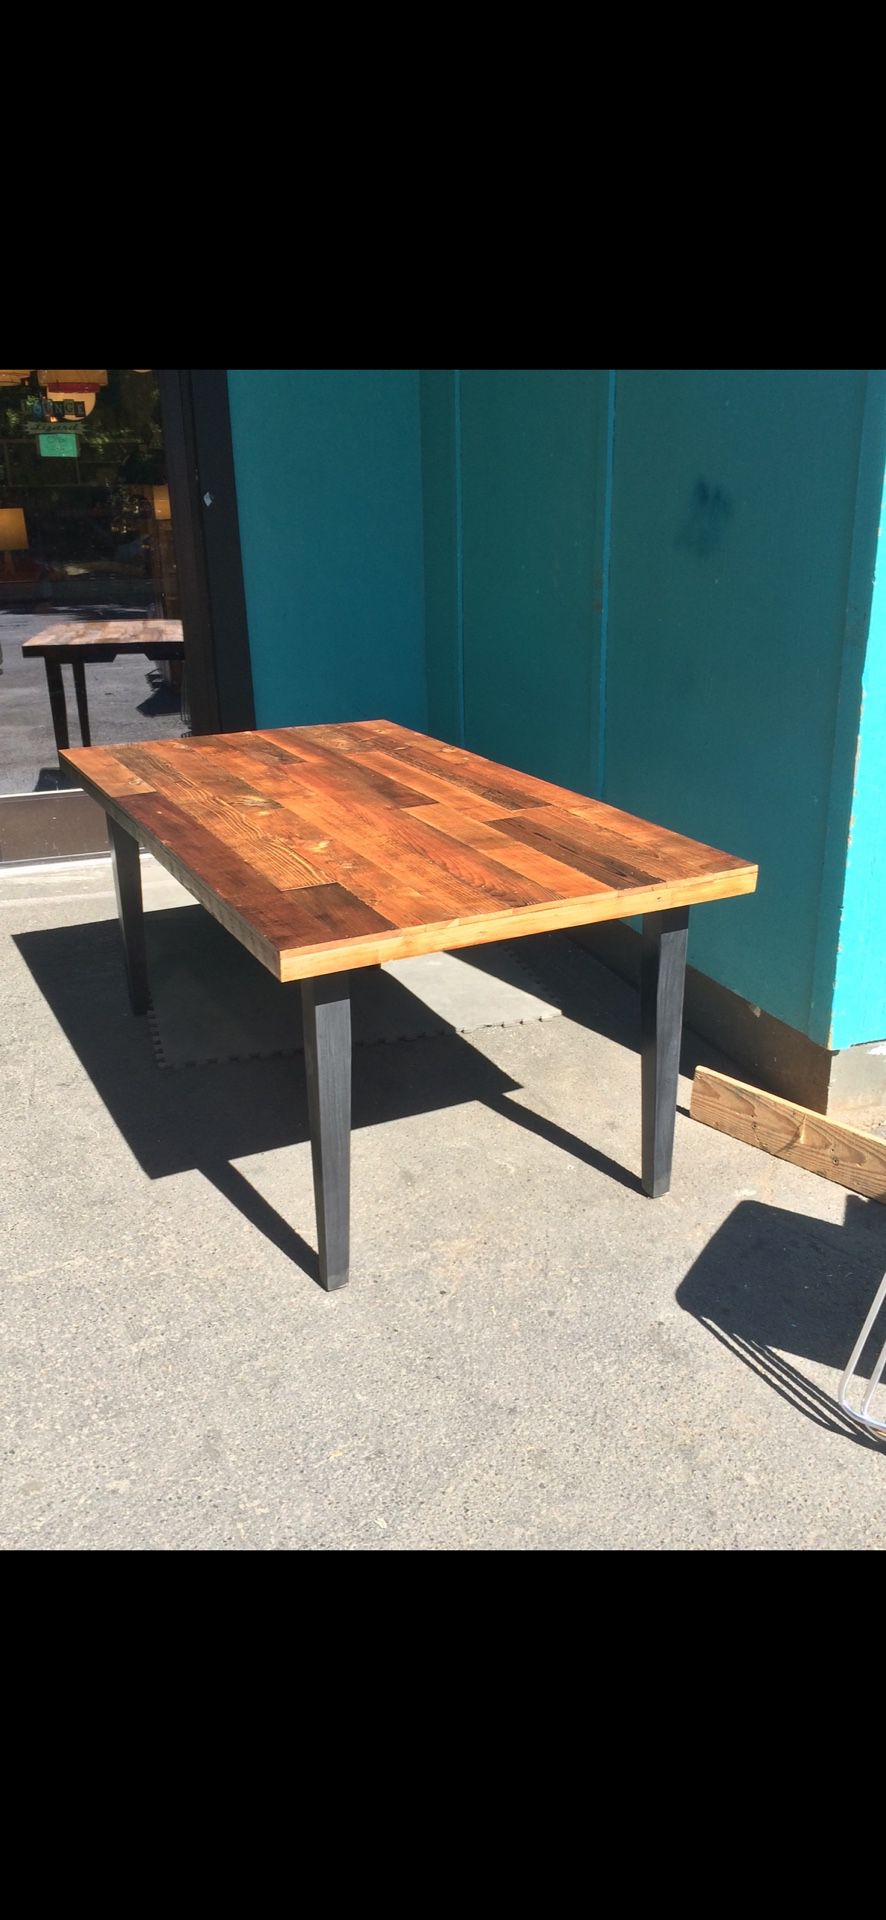 Custom Wood Dining Table 